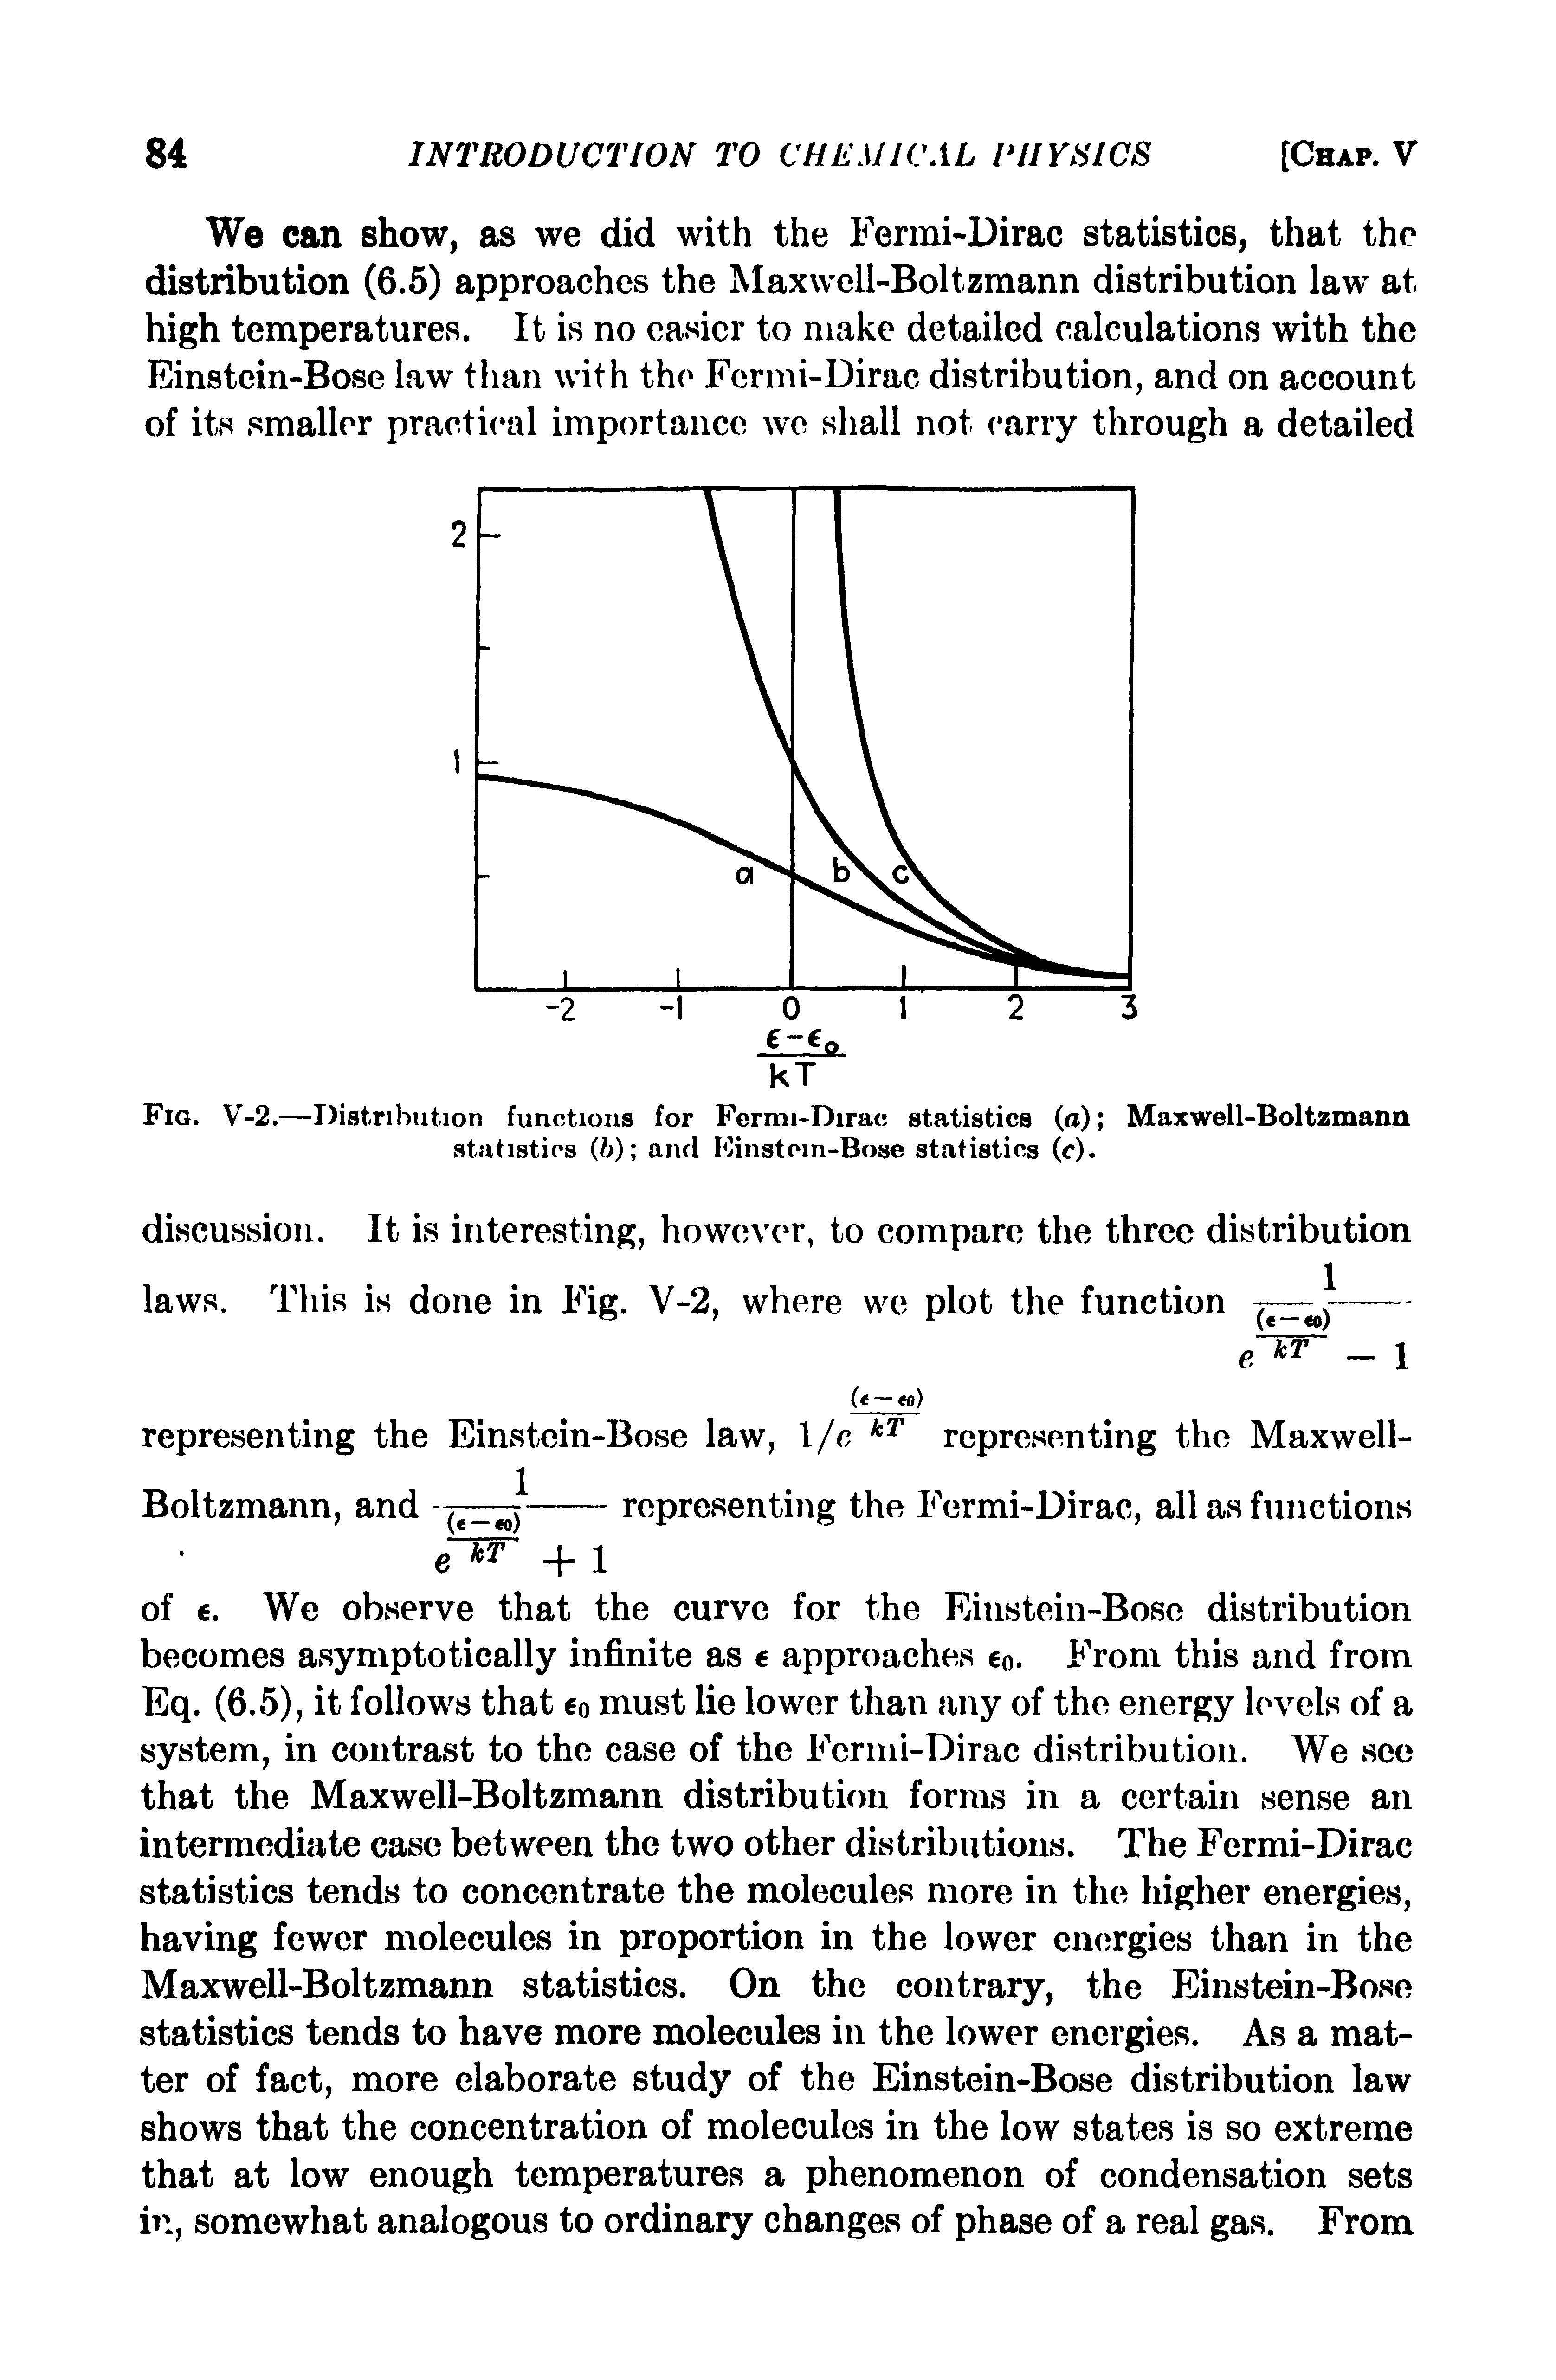 Fig. V-2.—Distribution functions for Fermi-Dirac statistics (a) Maxwell-Boltzmann statistics (b) and Finstoin-Bose statistics (c).